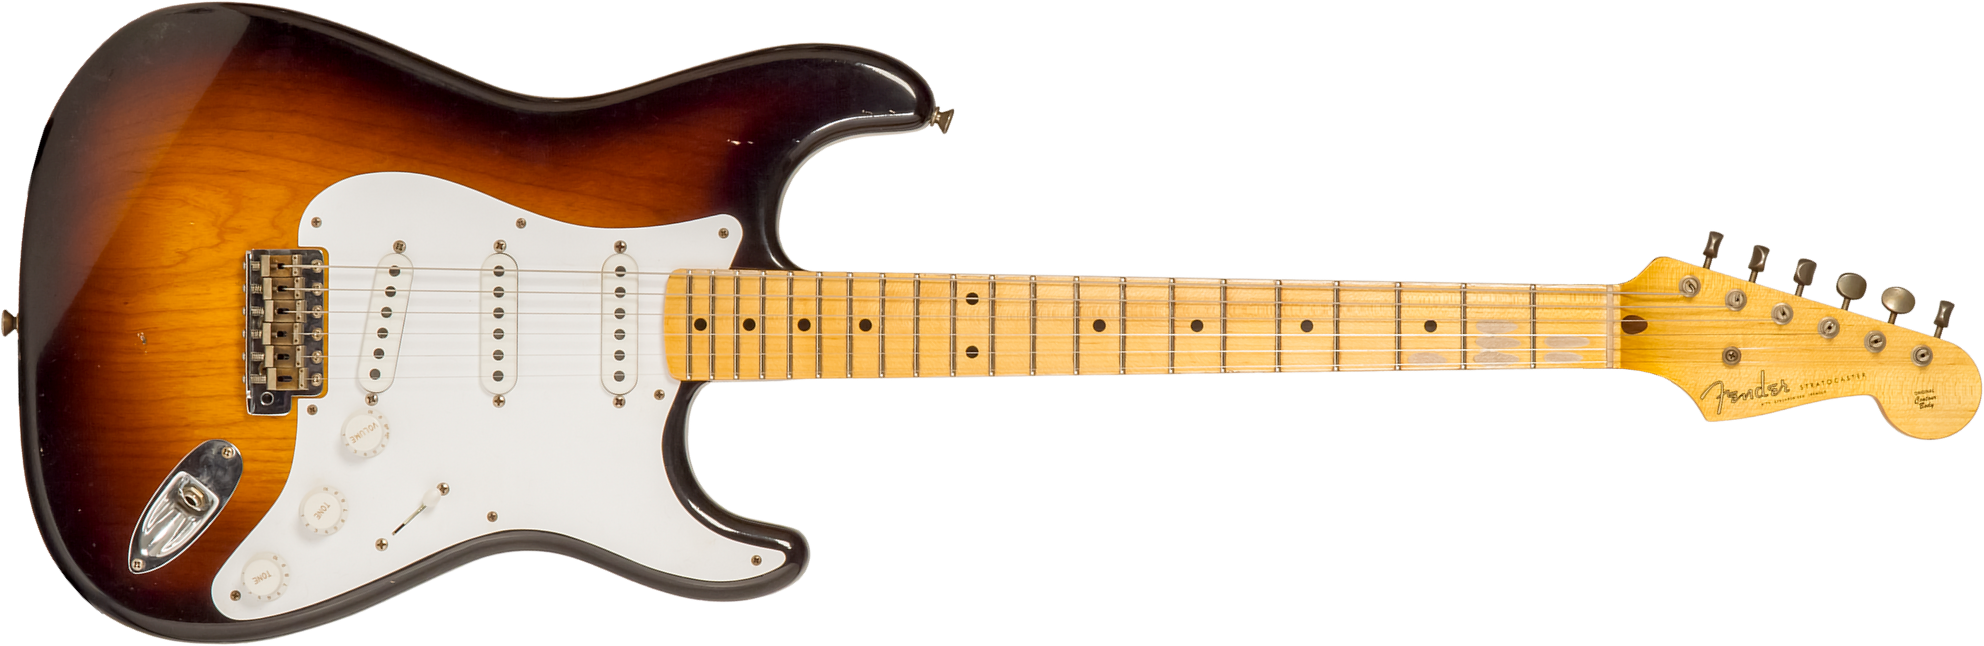 Fender Custom Shop Strat 1954 70th Anniv. 3s Trem Mn #xn4199 - Journeyman Relic Wide-fade 2-color Sunburst - Str shape electric guitar - Main picture